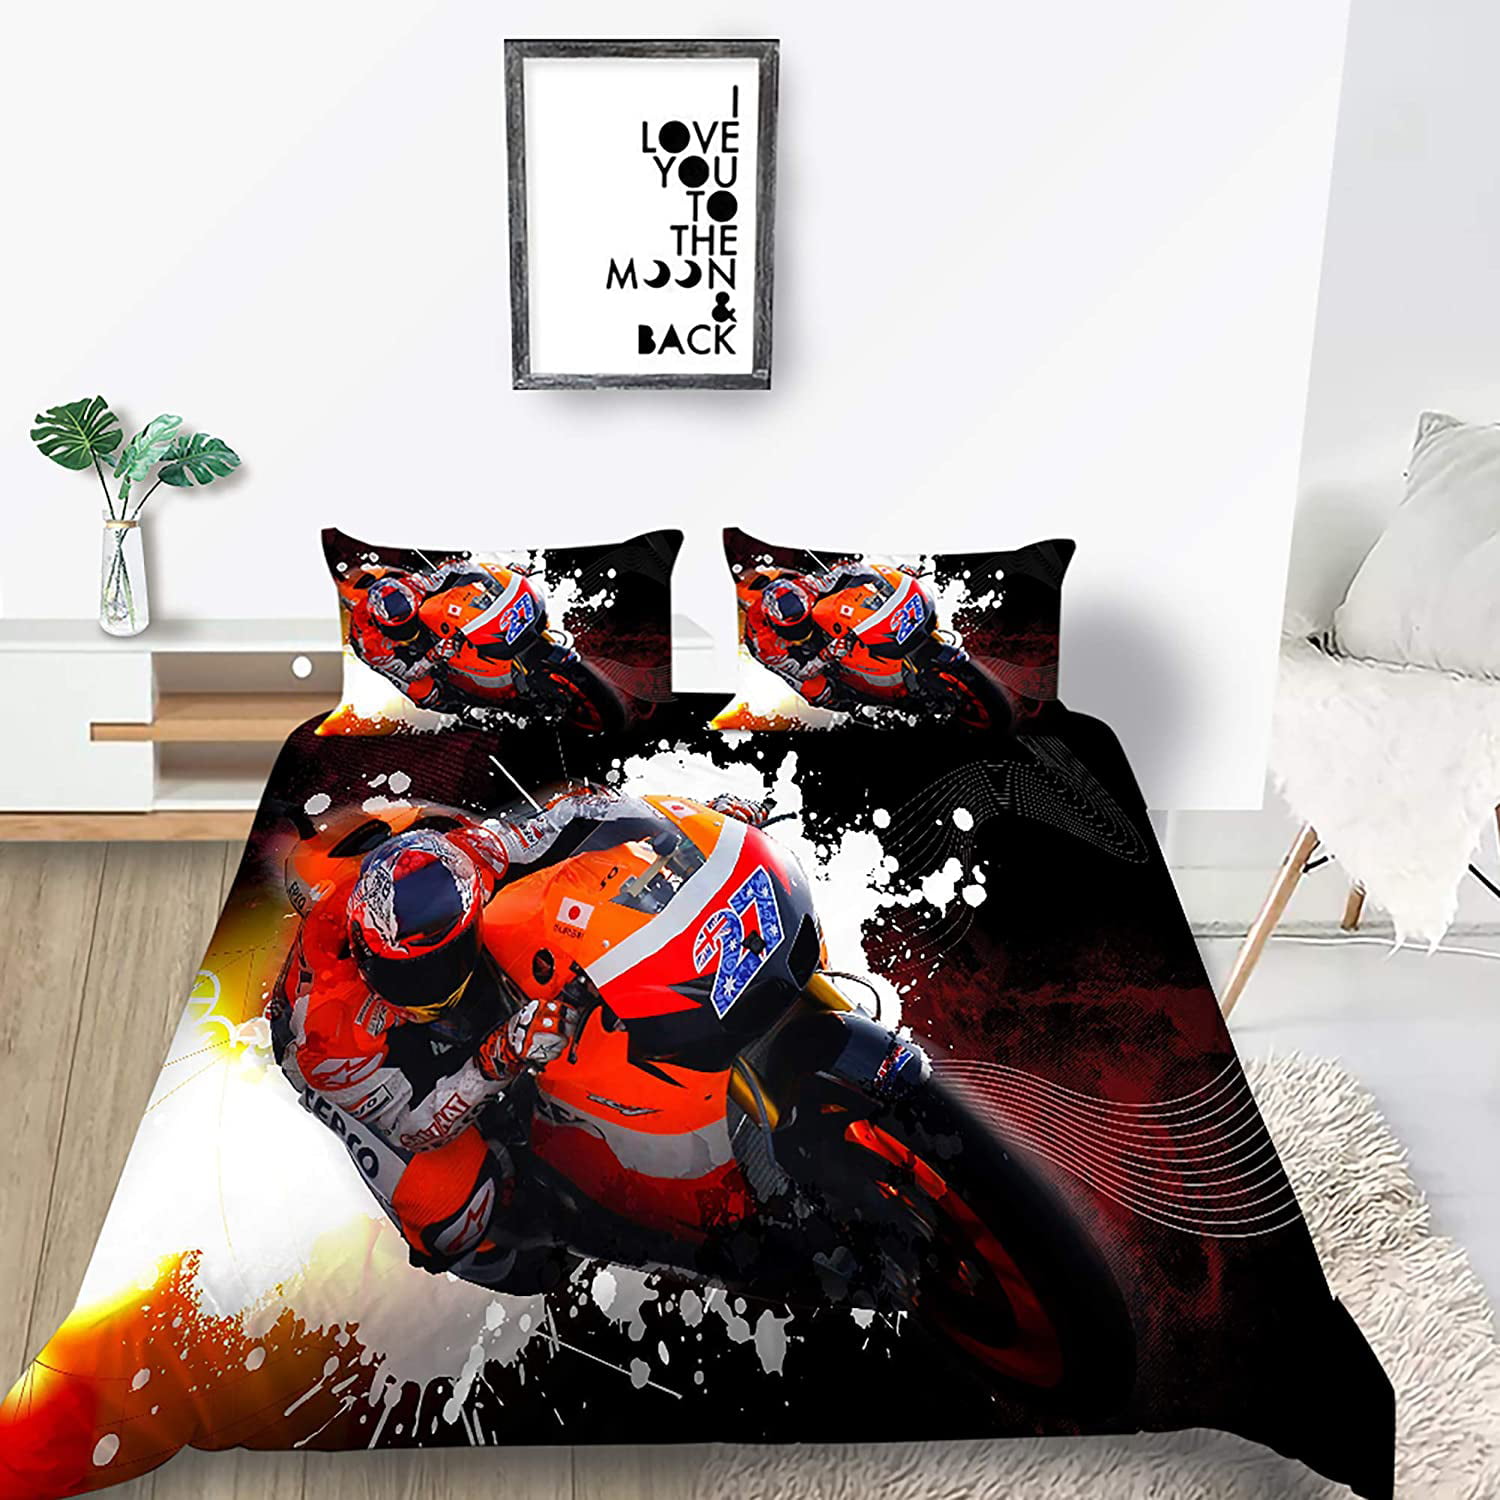 Bed Sets For Boys Motocross, Dry Clean Duvet Cover